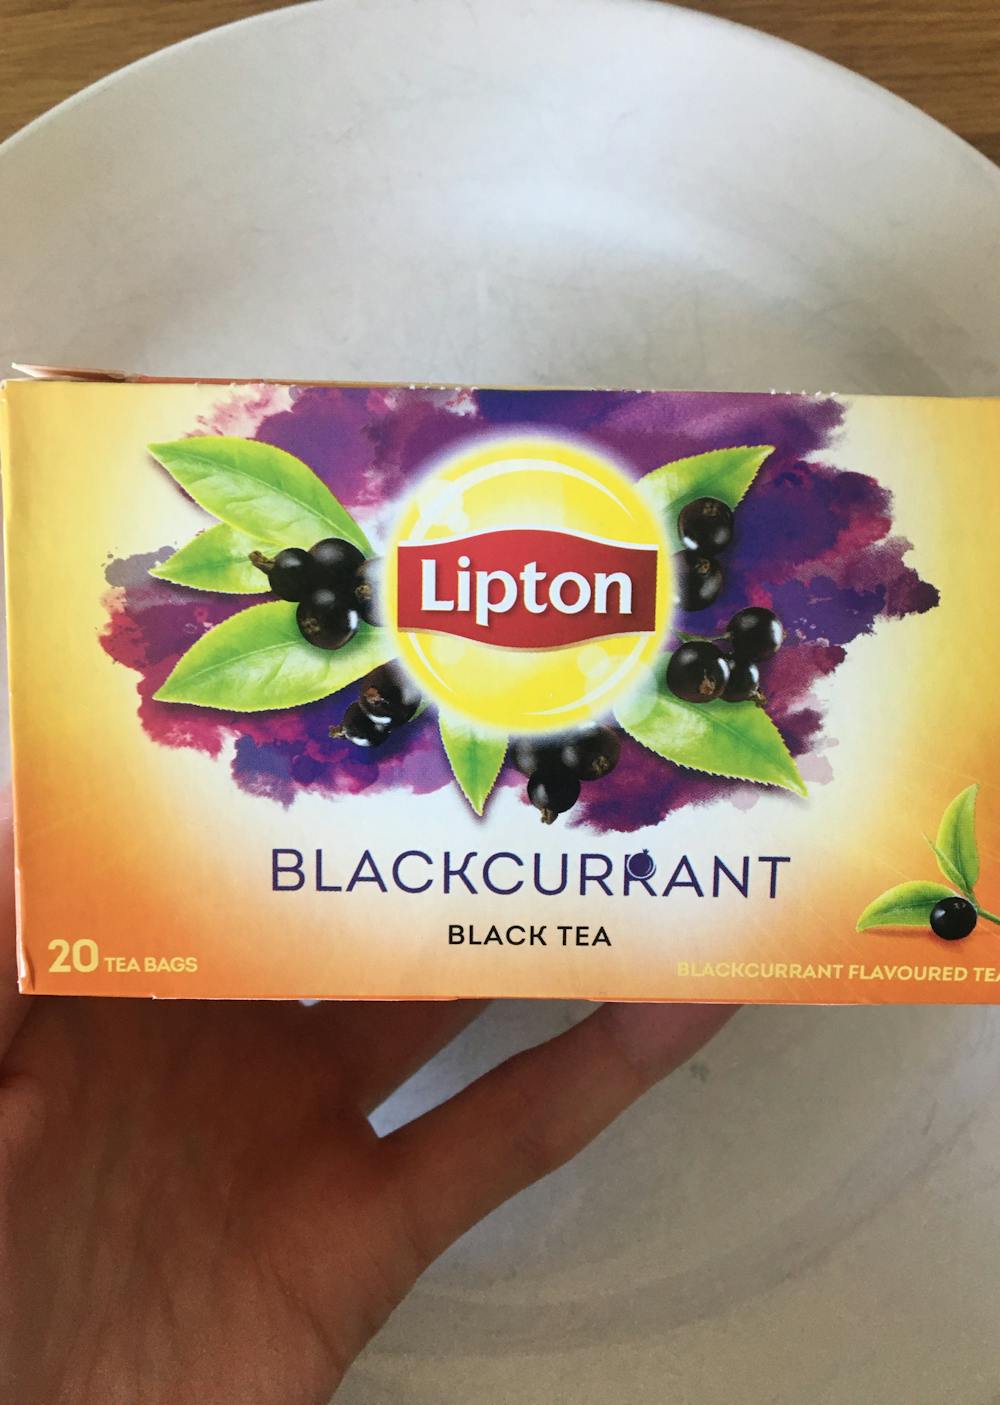 Blackcurrant tea, Lipton